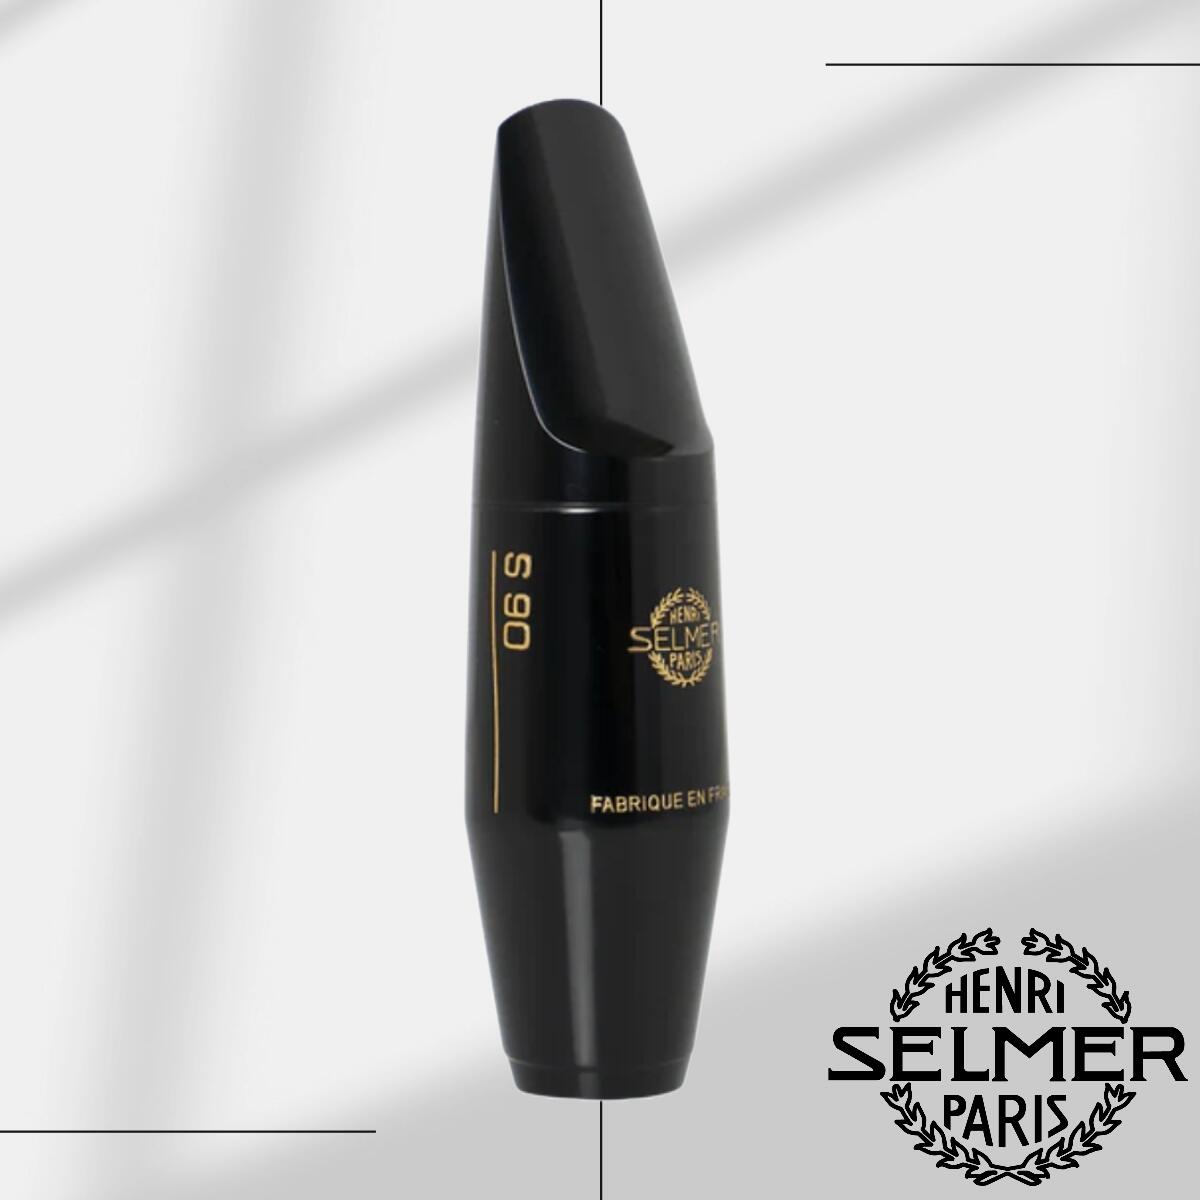 H. Selmer S90 MOUTHPIECE FOR TENOR SAXOPHONE 【セルマー】【マウスピース】【S90】【テナーサックス 用】【新品】【送料当社負担】【管楽器専門店】【Wind Nagoya】